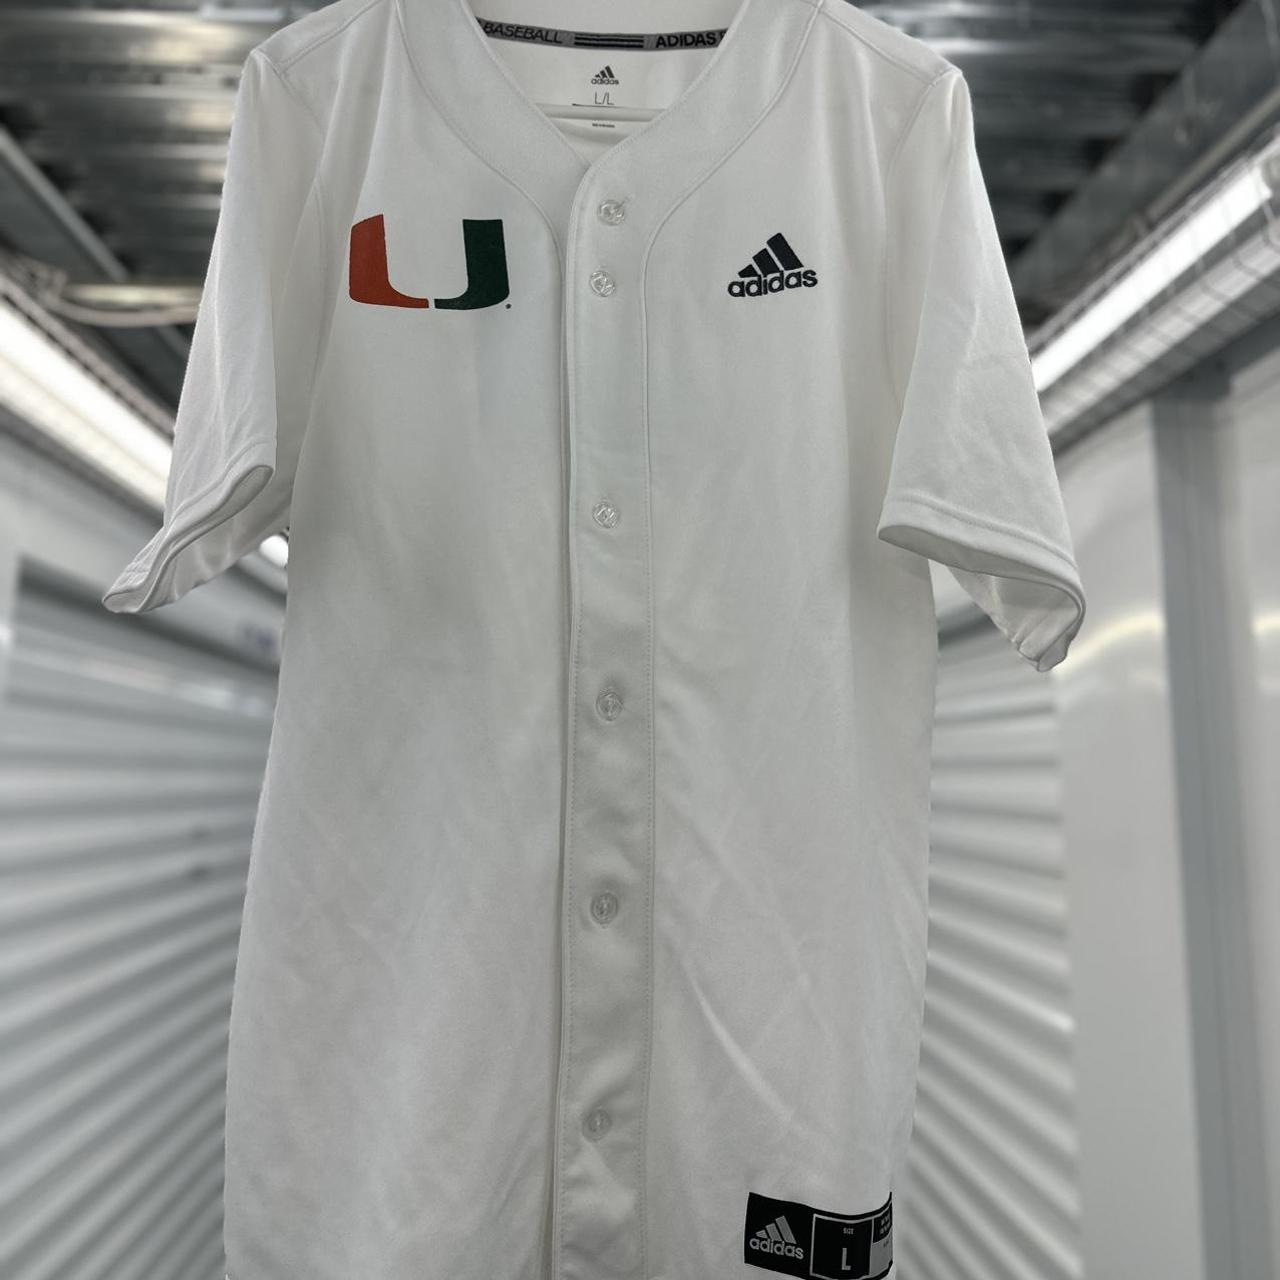 Authentic University of Miami Adidas Baseball - Depop